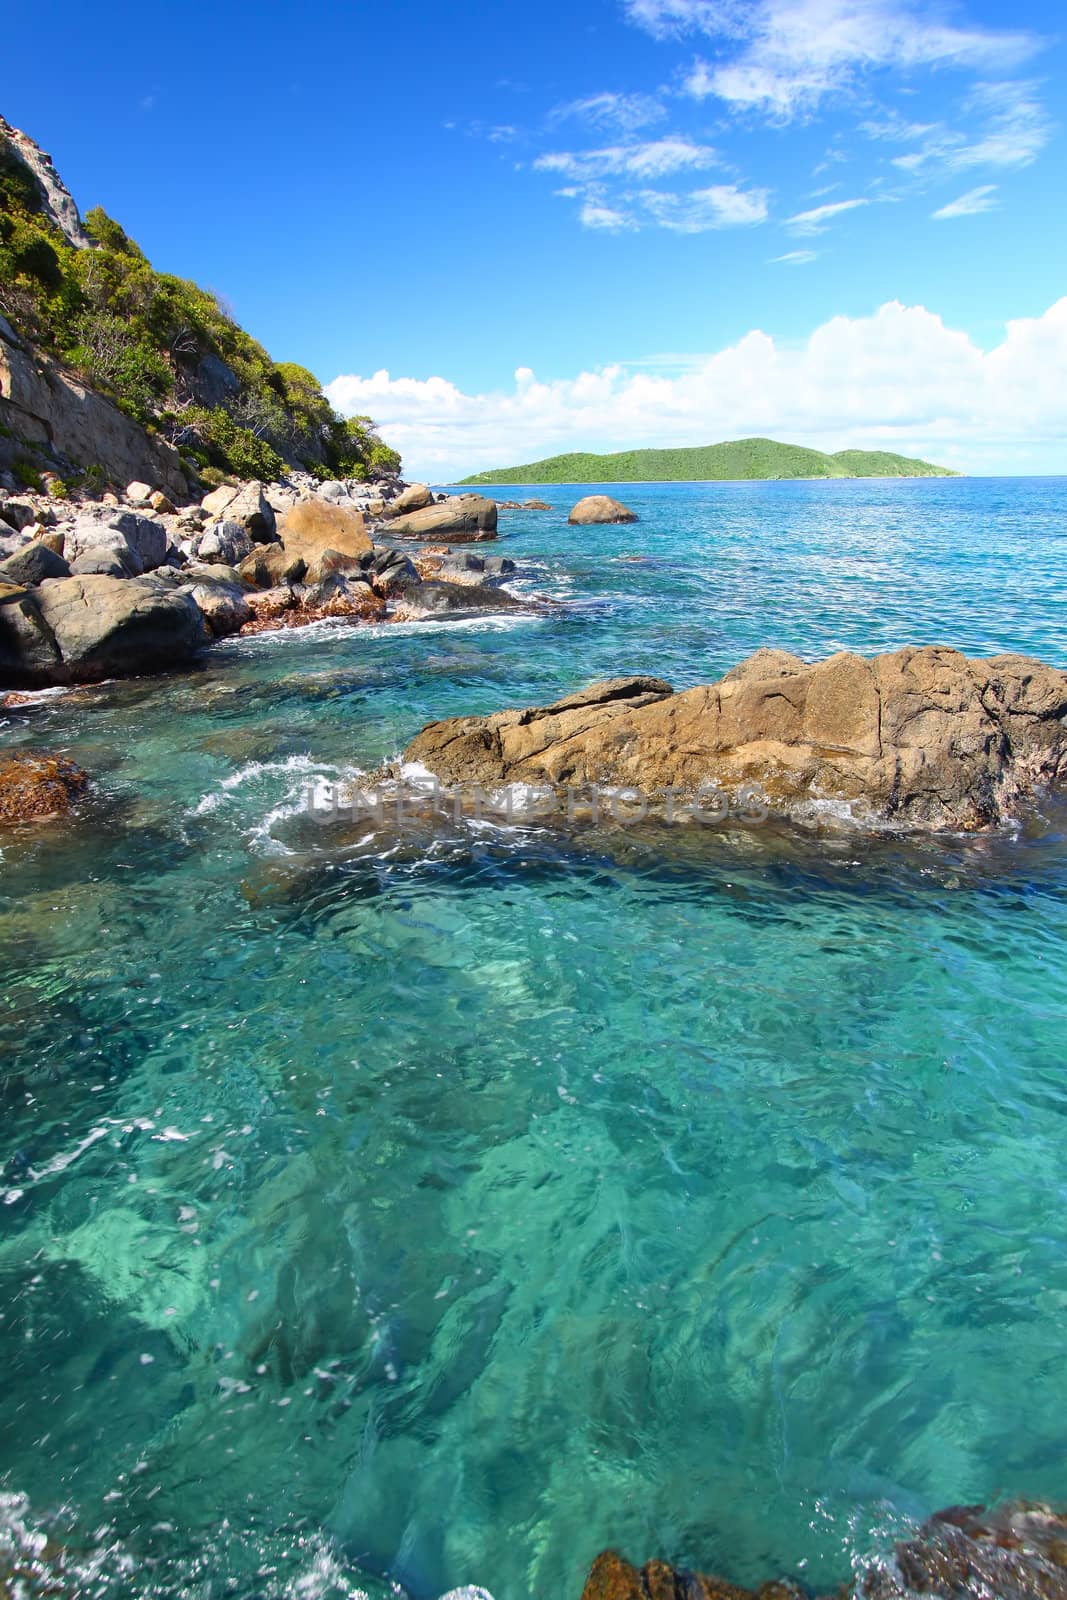 Amazing British Virgin Islands on a beautiful sunny day.